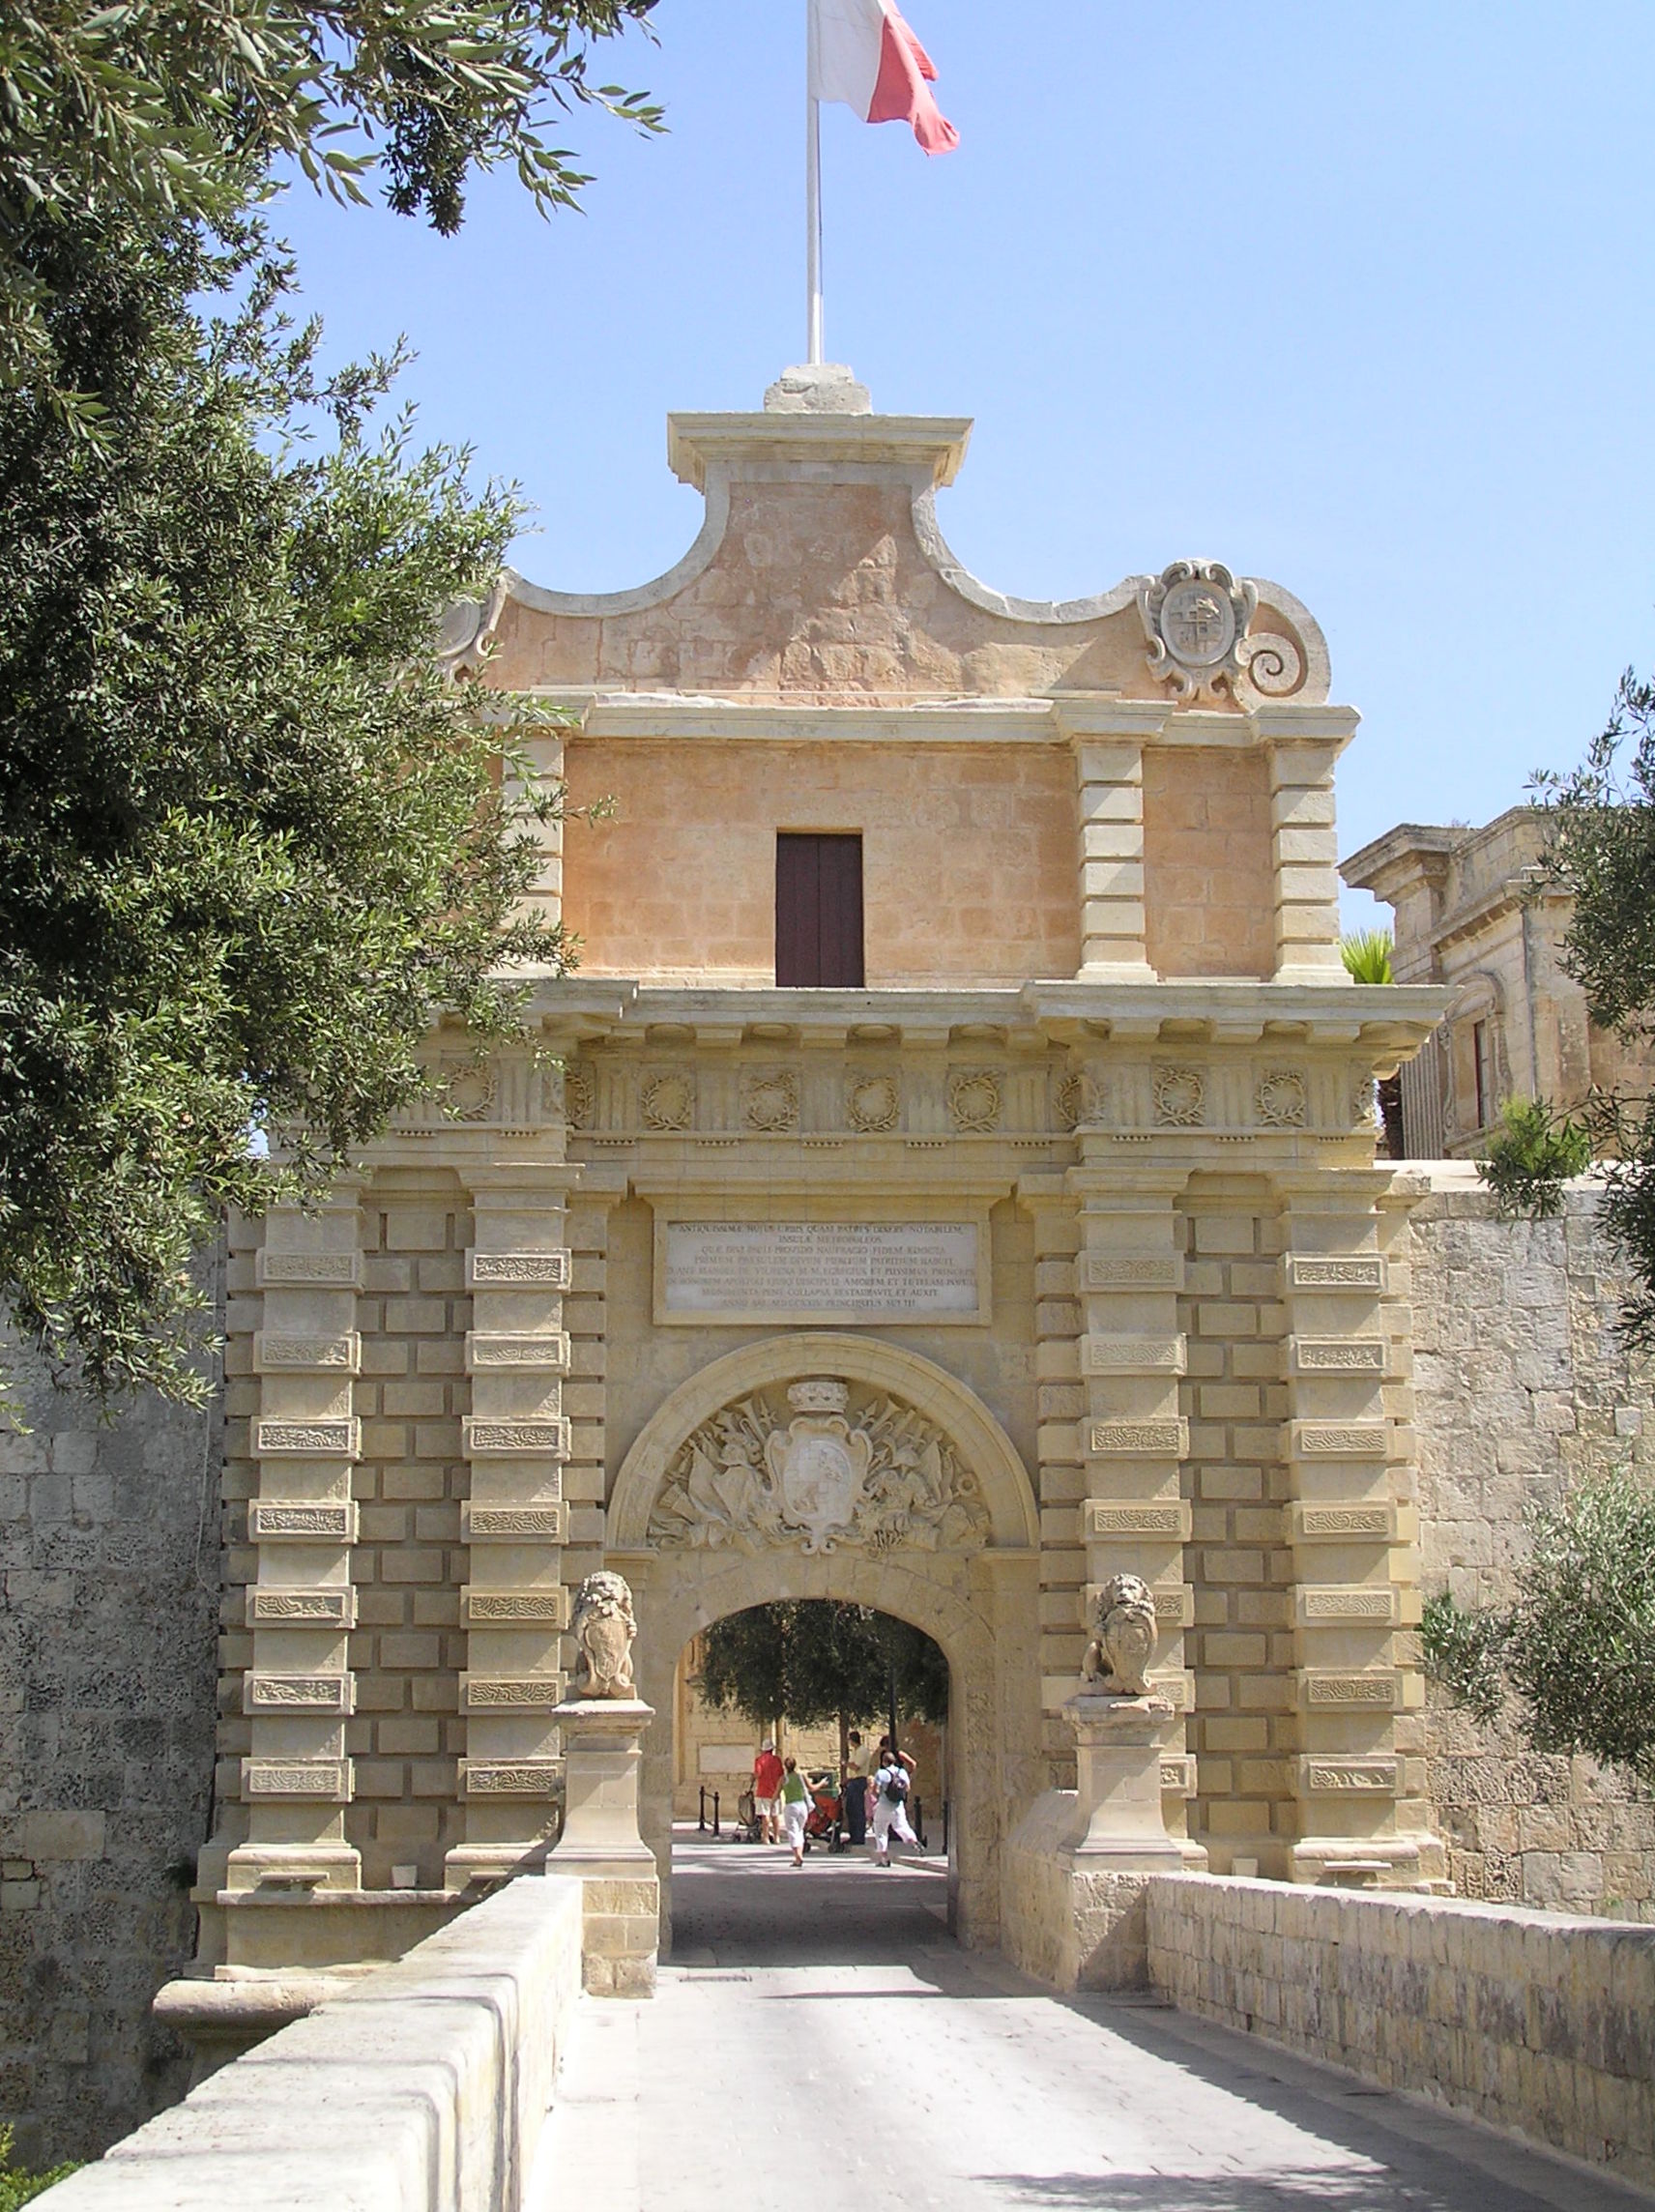 Mdina: Malta’s Fortified Former Capital